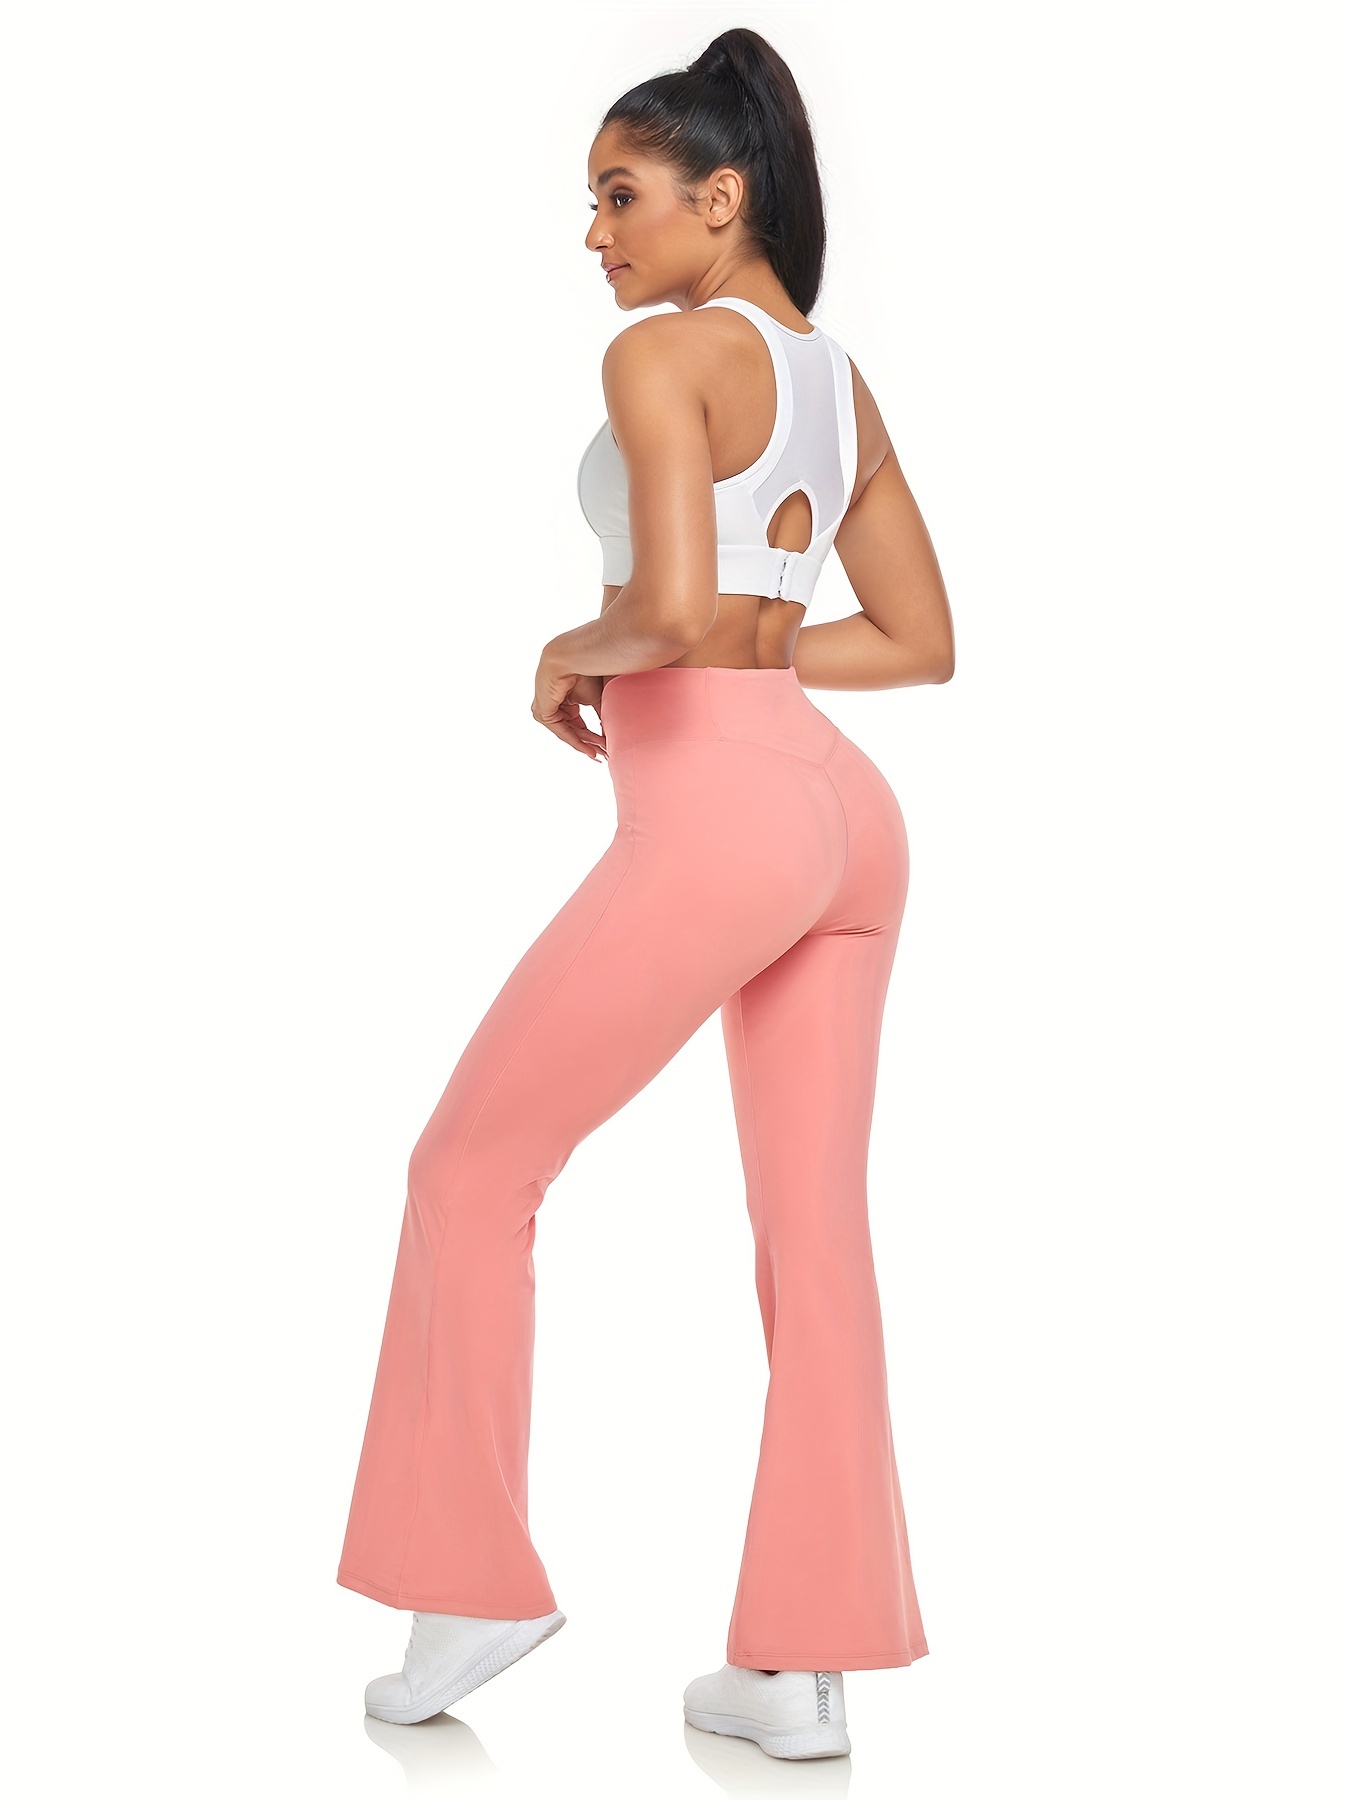 Pantalones De Yoga Acampanados Sueltos Para Mujer, Leggings Acampanados,  Pantalones Casuales De Entrenamiento De Talle Alto Suaves